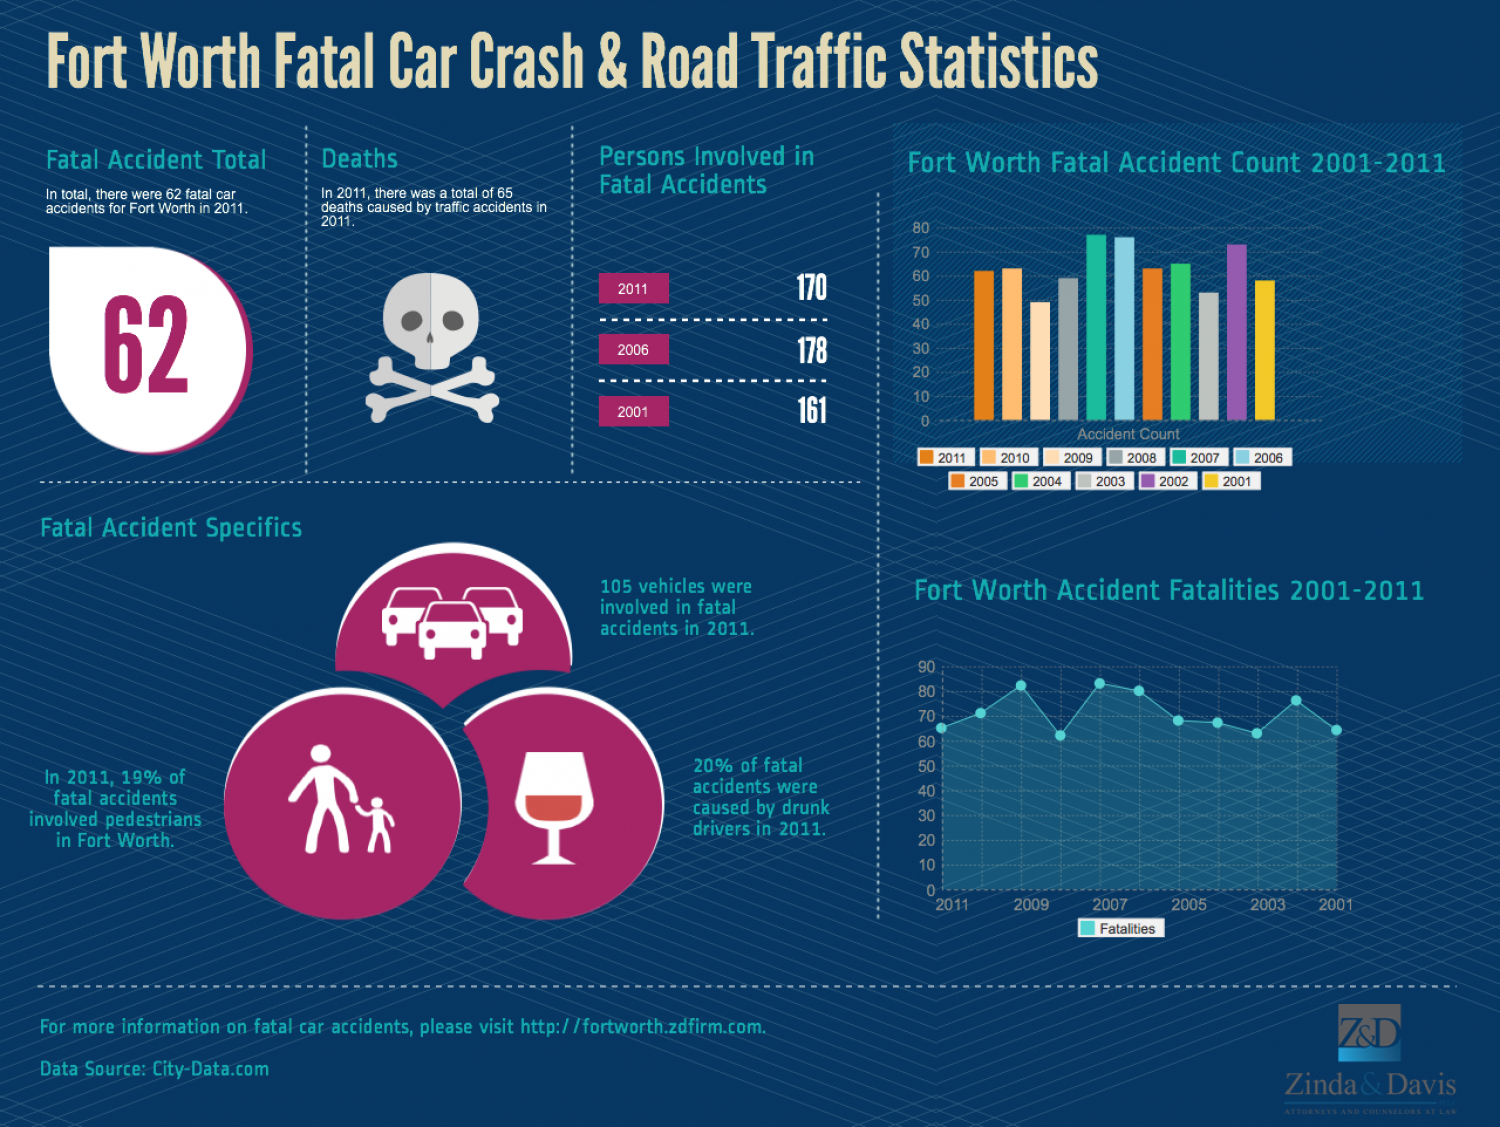 Fort Worth Fatal Car Crash & Road Traffic Statistics Infographic